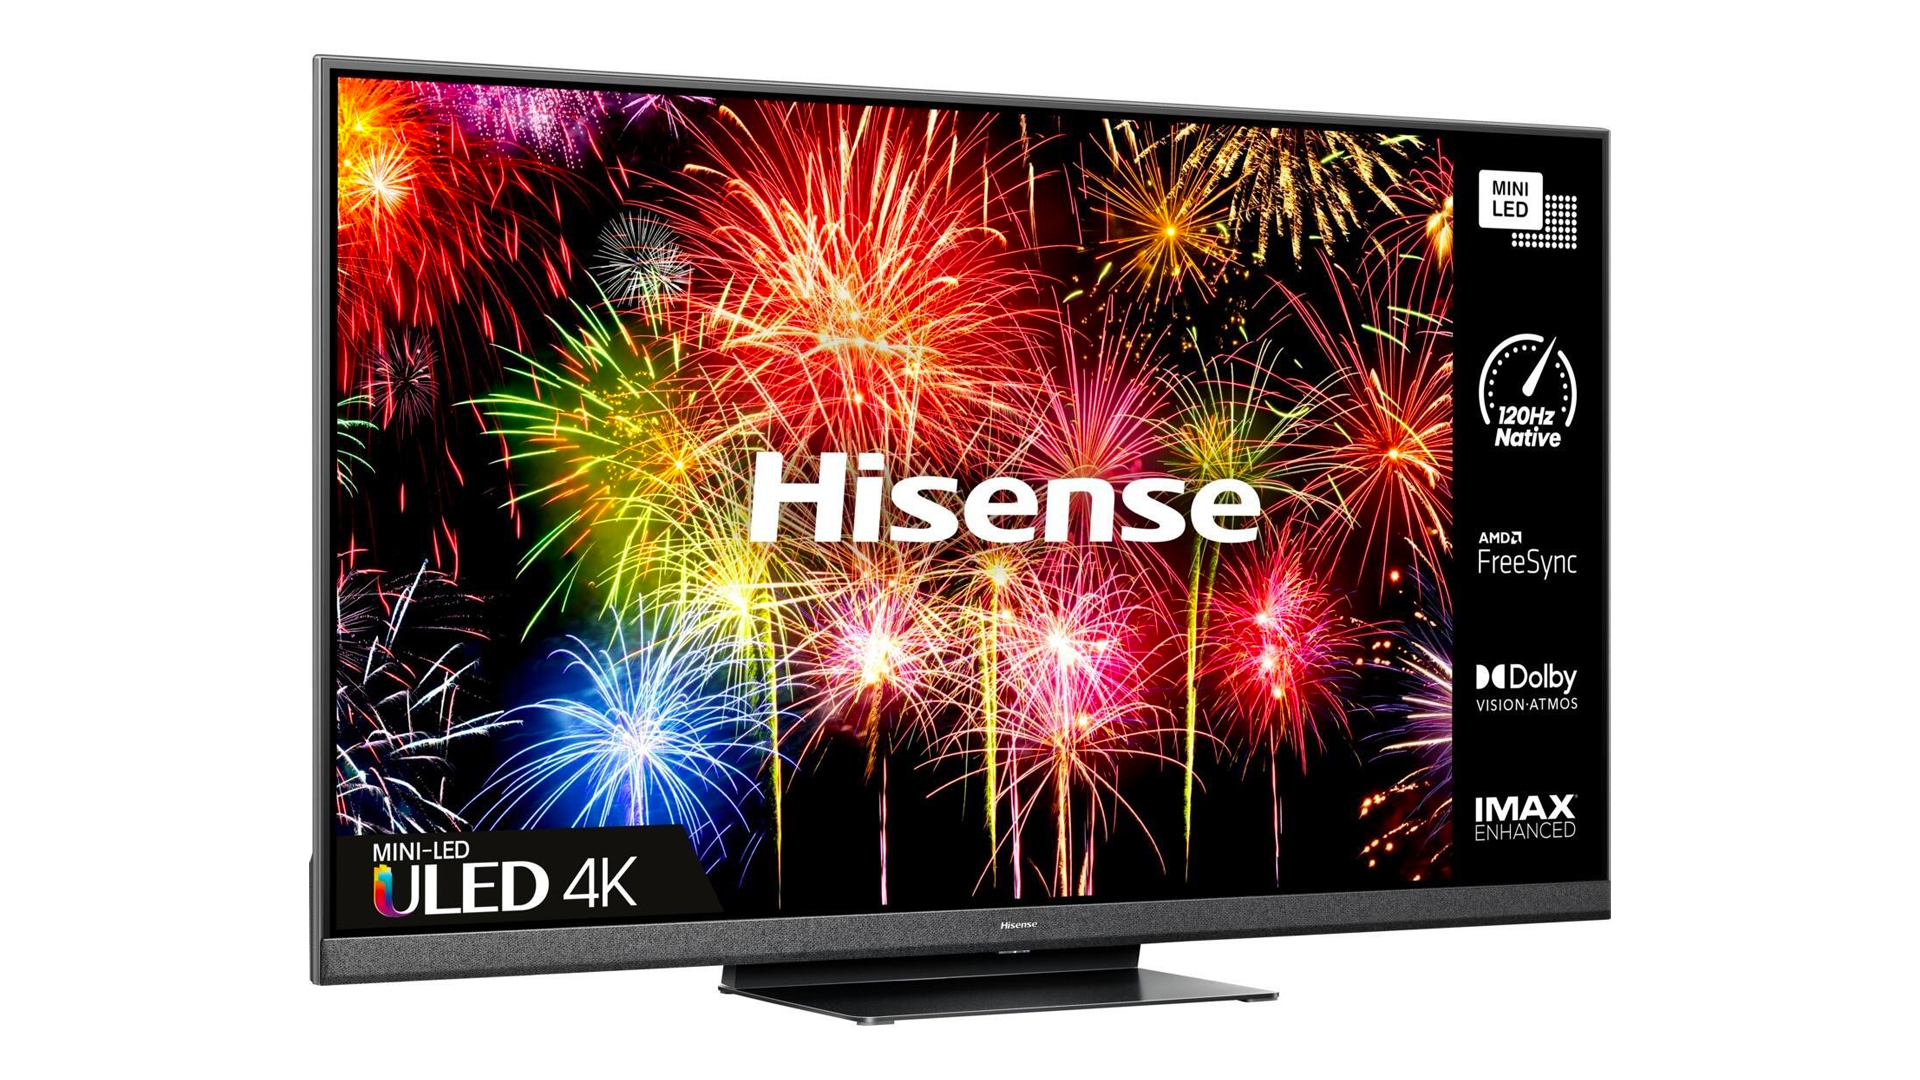 Hisense U8H TV on a white background